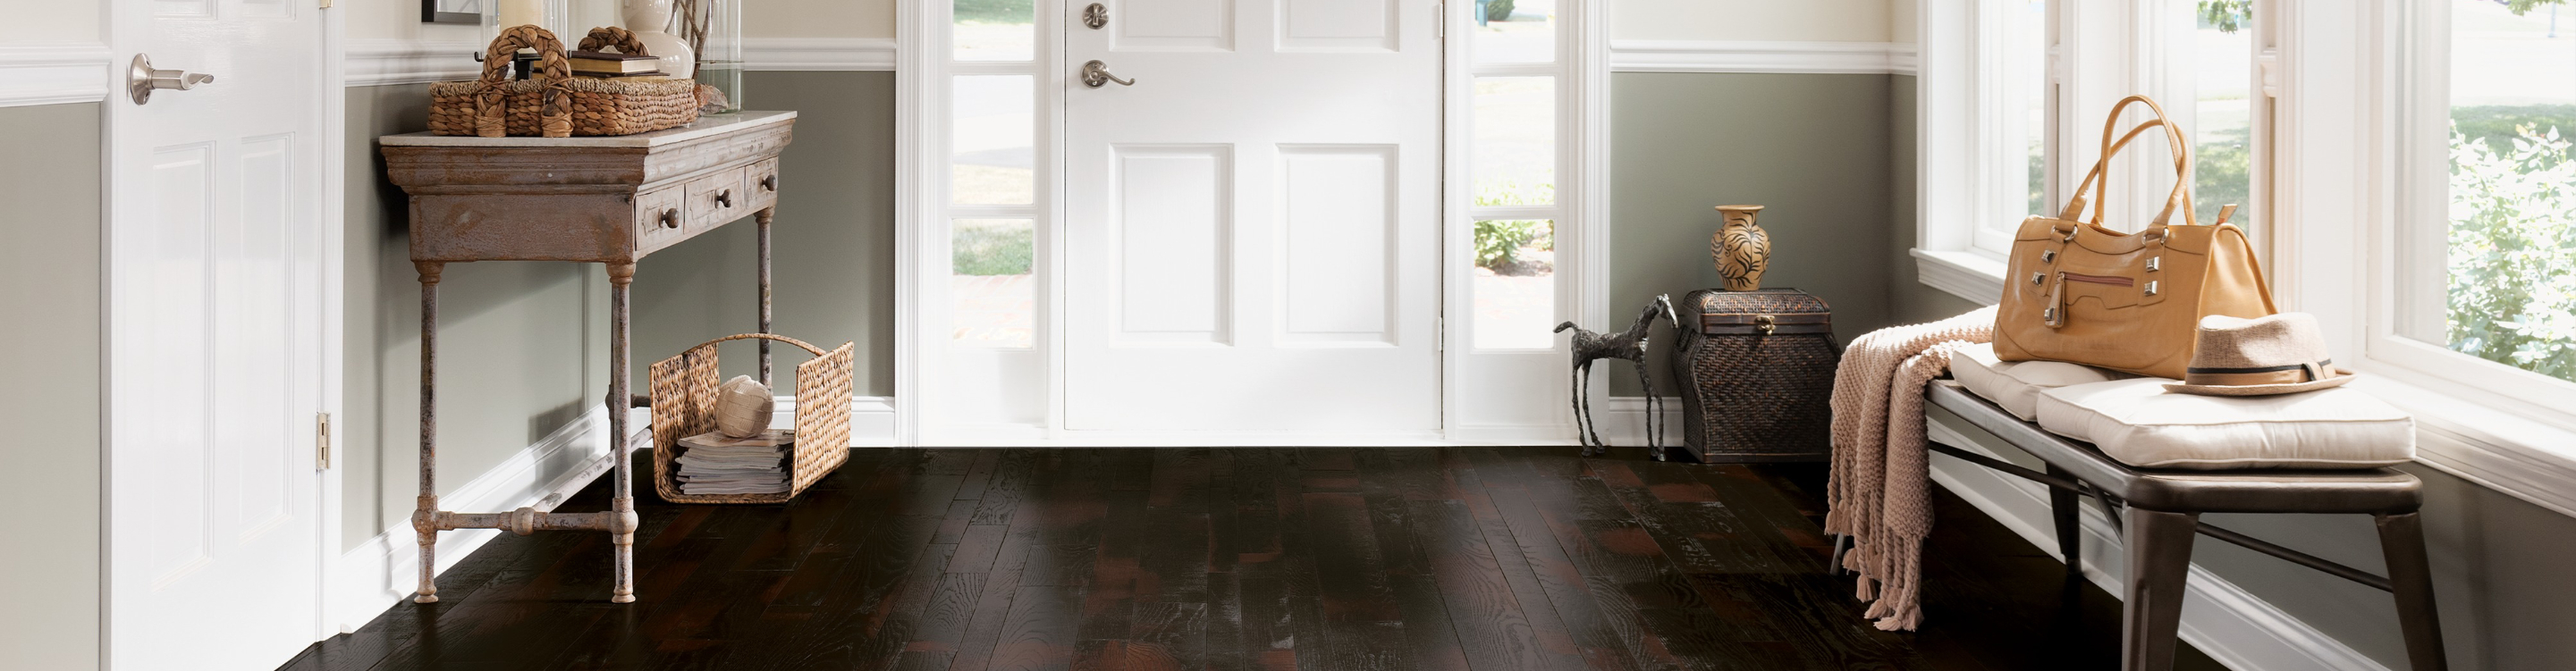 dark burgundy oak hardwood floors in entry way with pendant lighting and white door